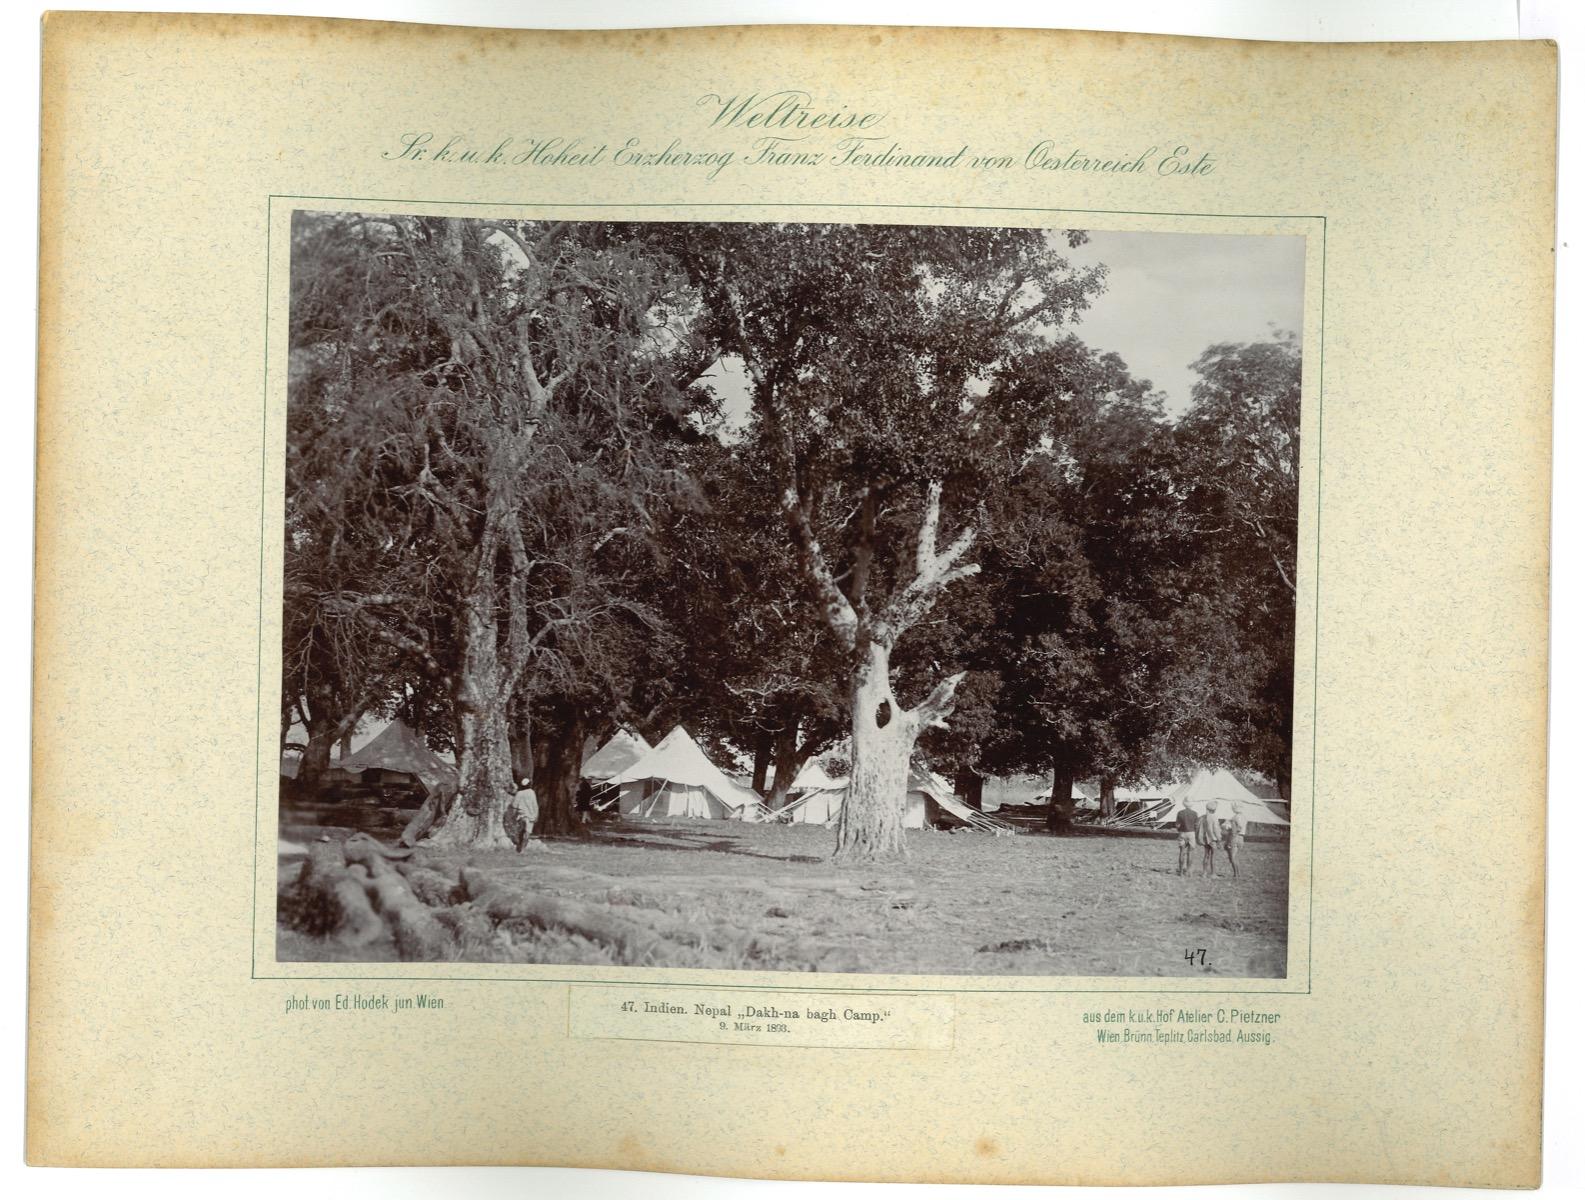 Unknown Landscape Photograph - Dakh-na bagh Camp - Vintage Photo - 1893